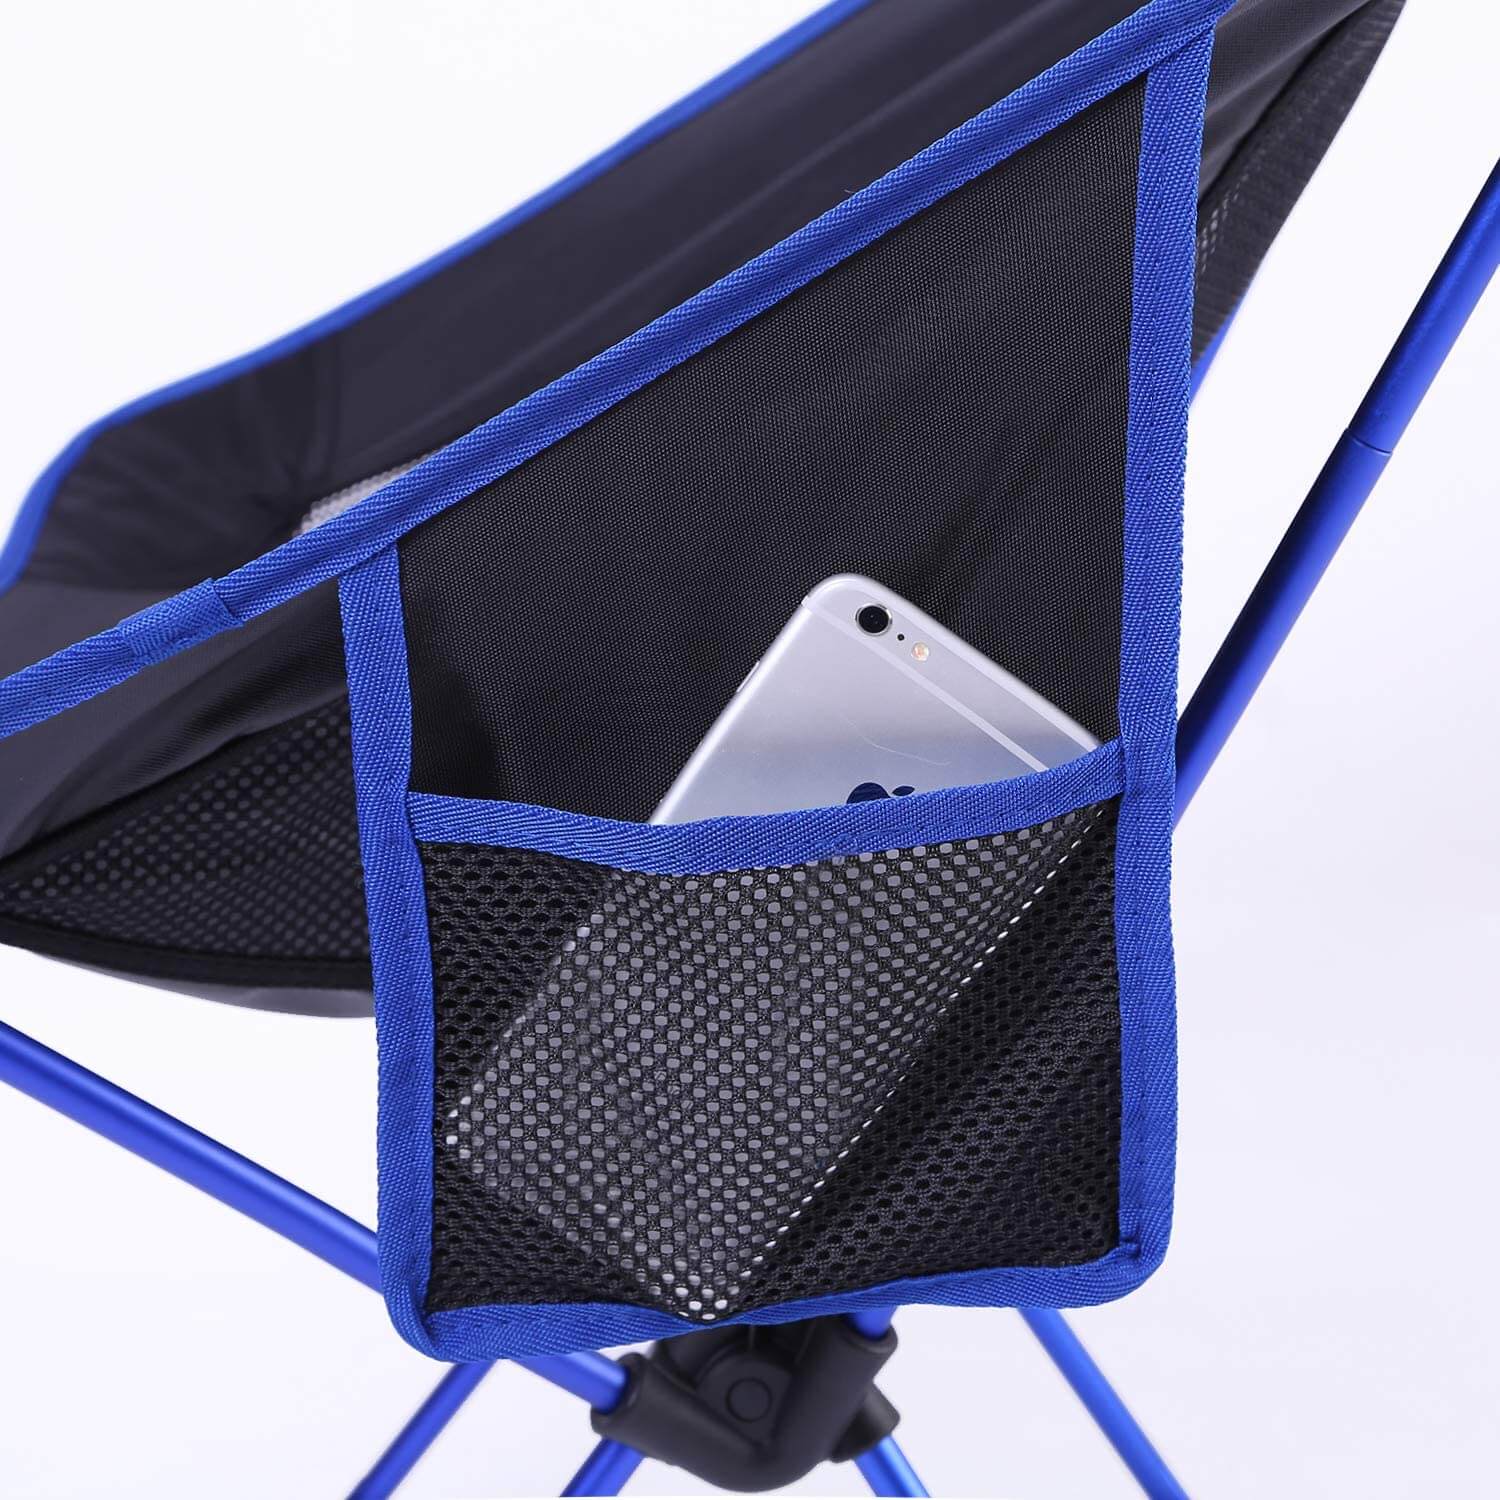 Silla plegable portátil y ultraligera con bolsa de transporte